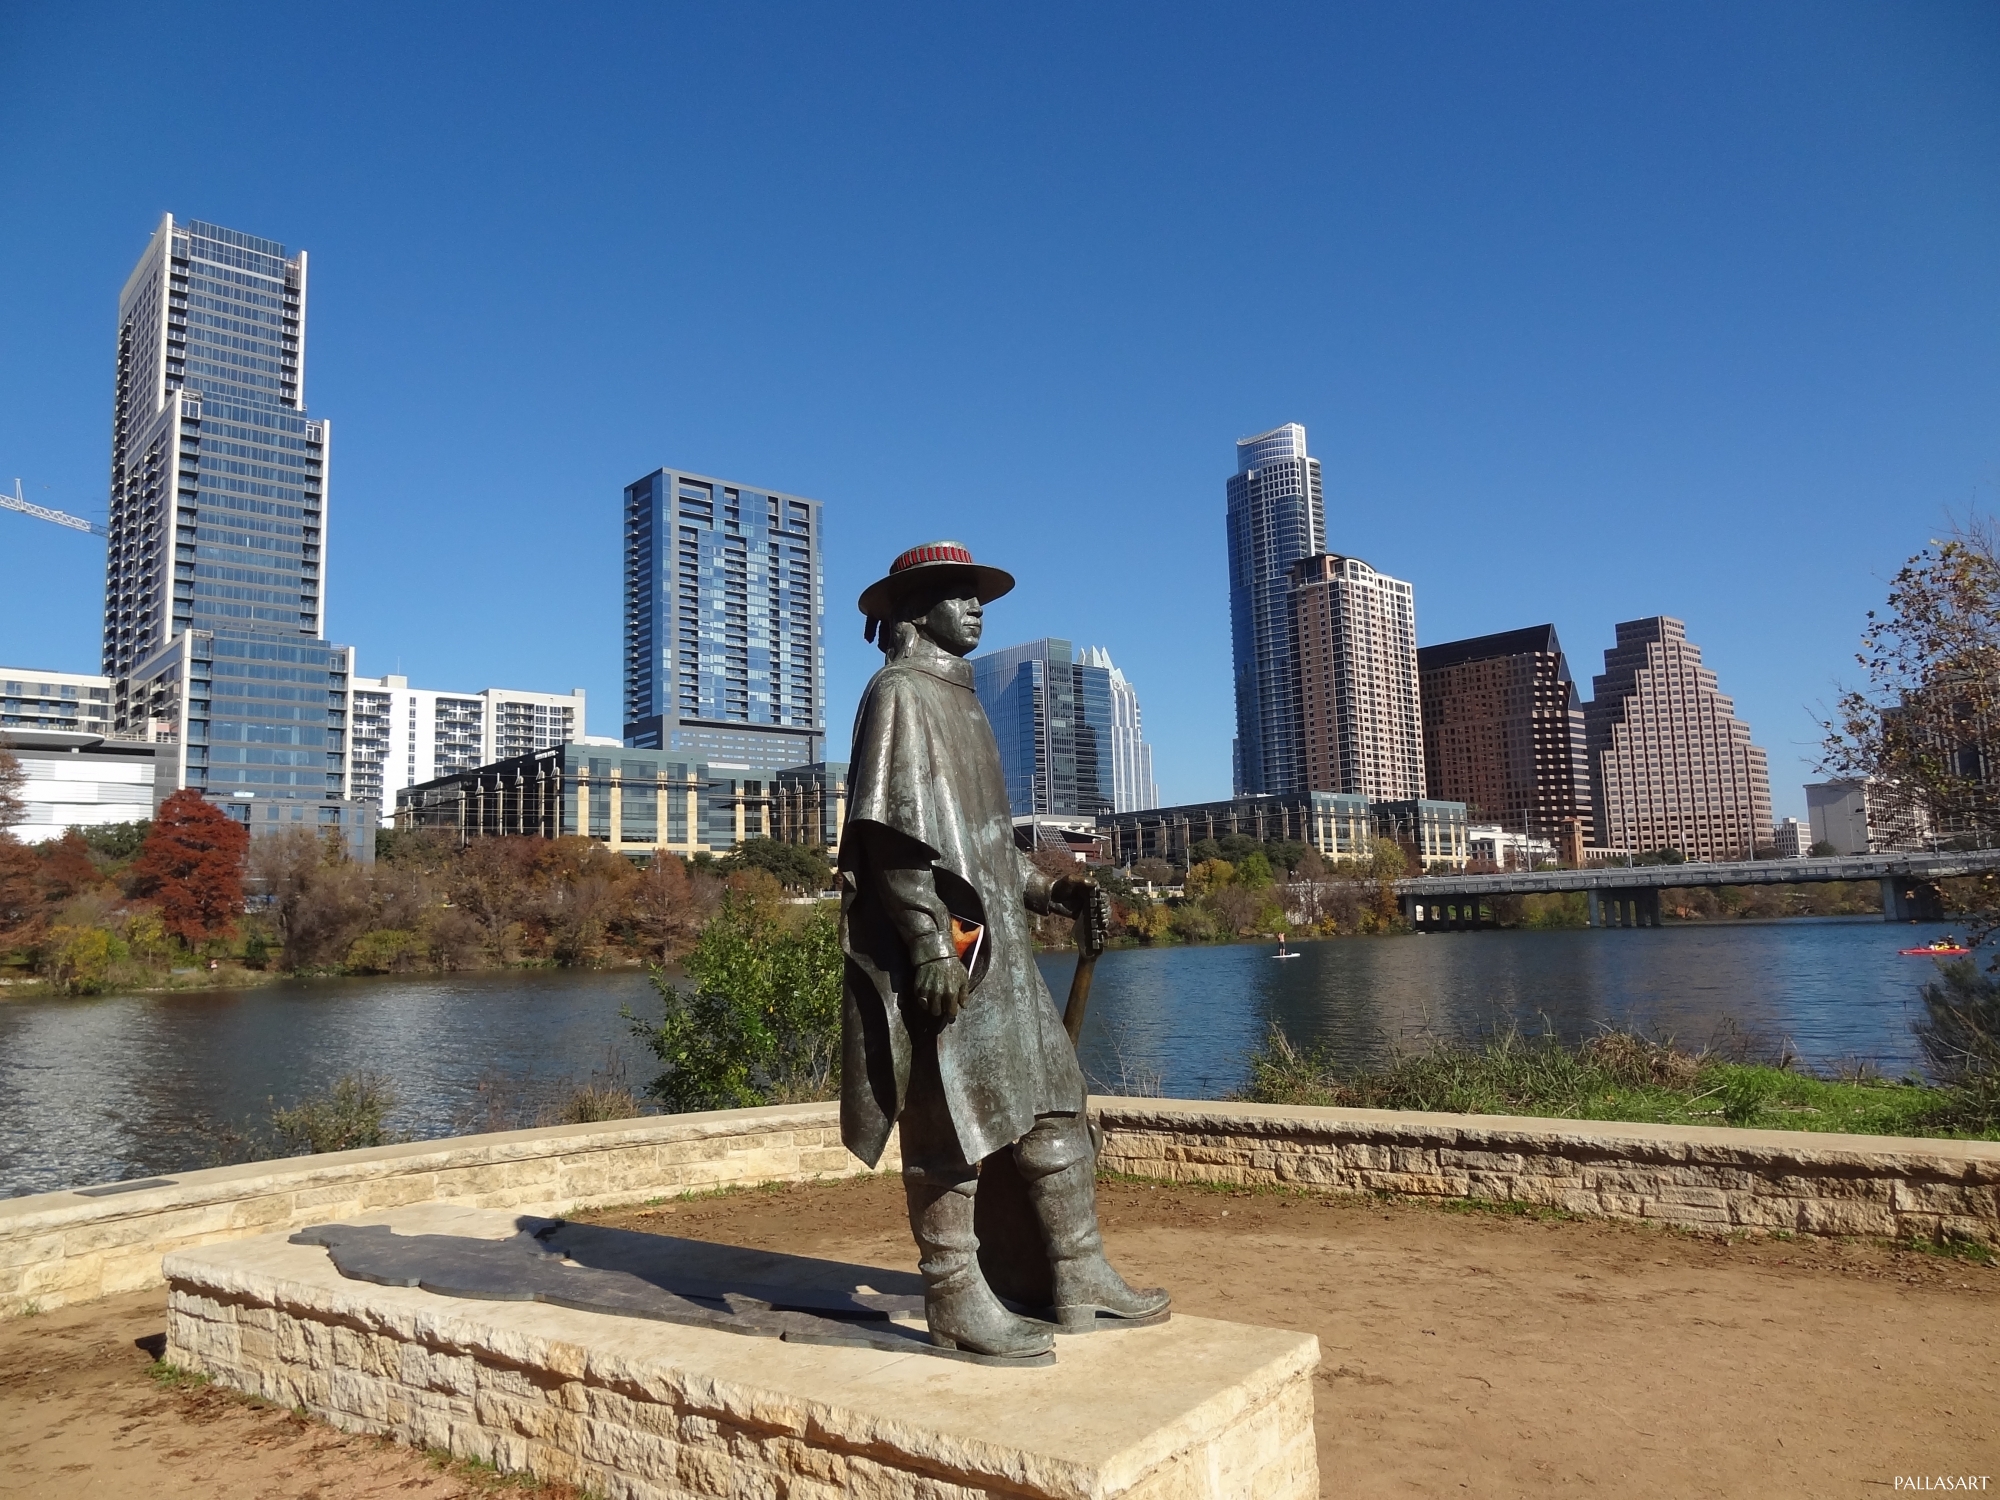 Stevie Ray Vaughan statue in Austin, Texas